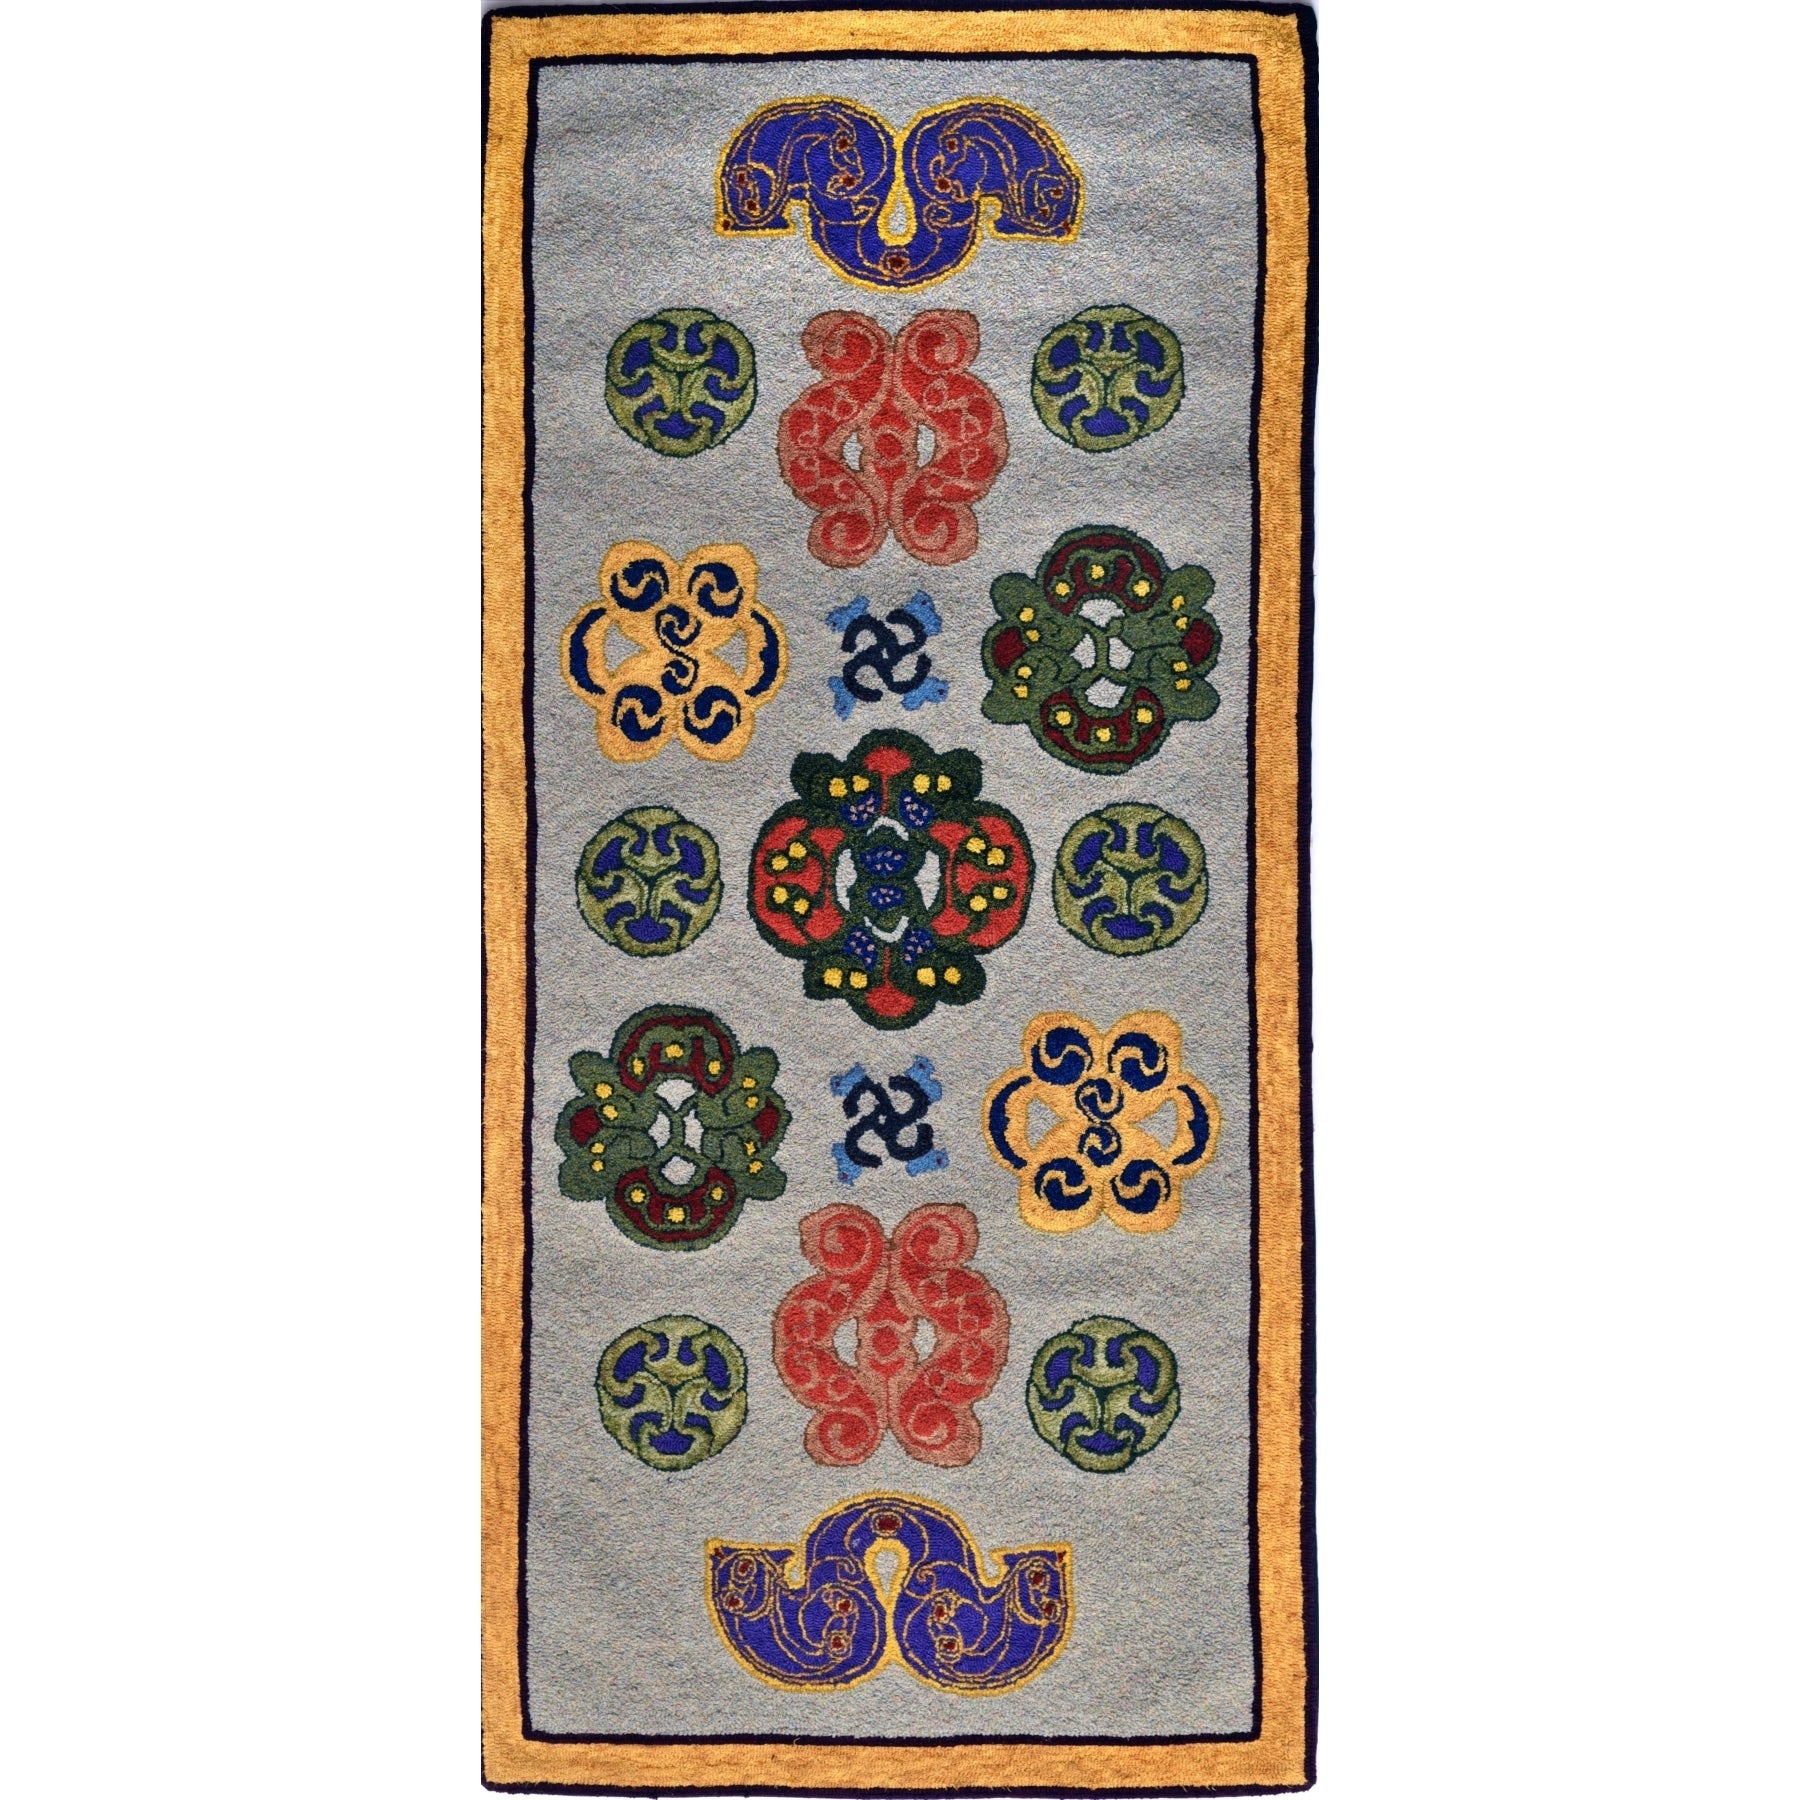 Celtic Horse Ornaments, rug hooked by John Leonard